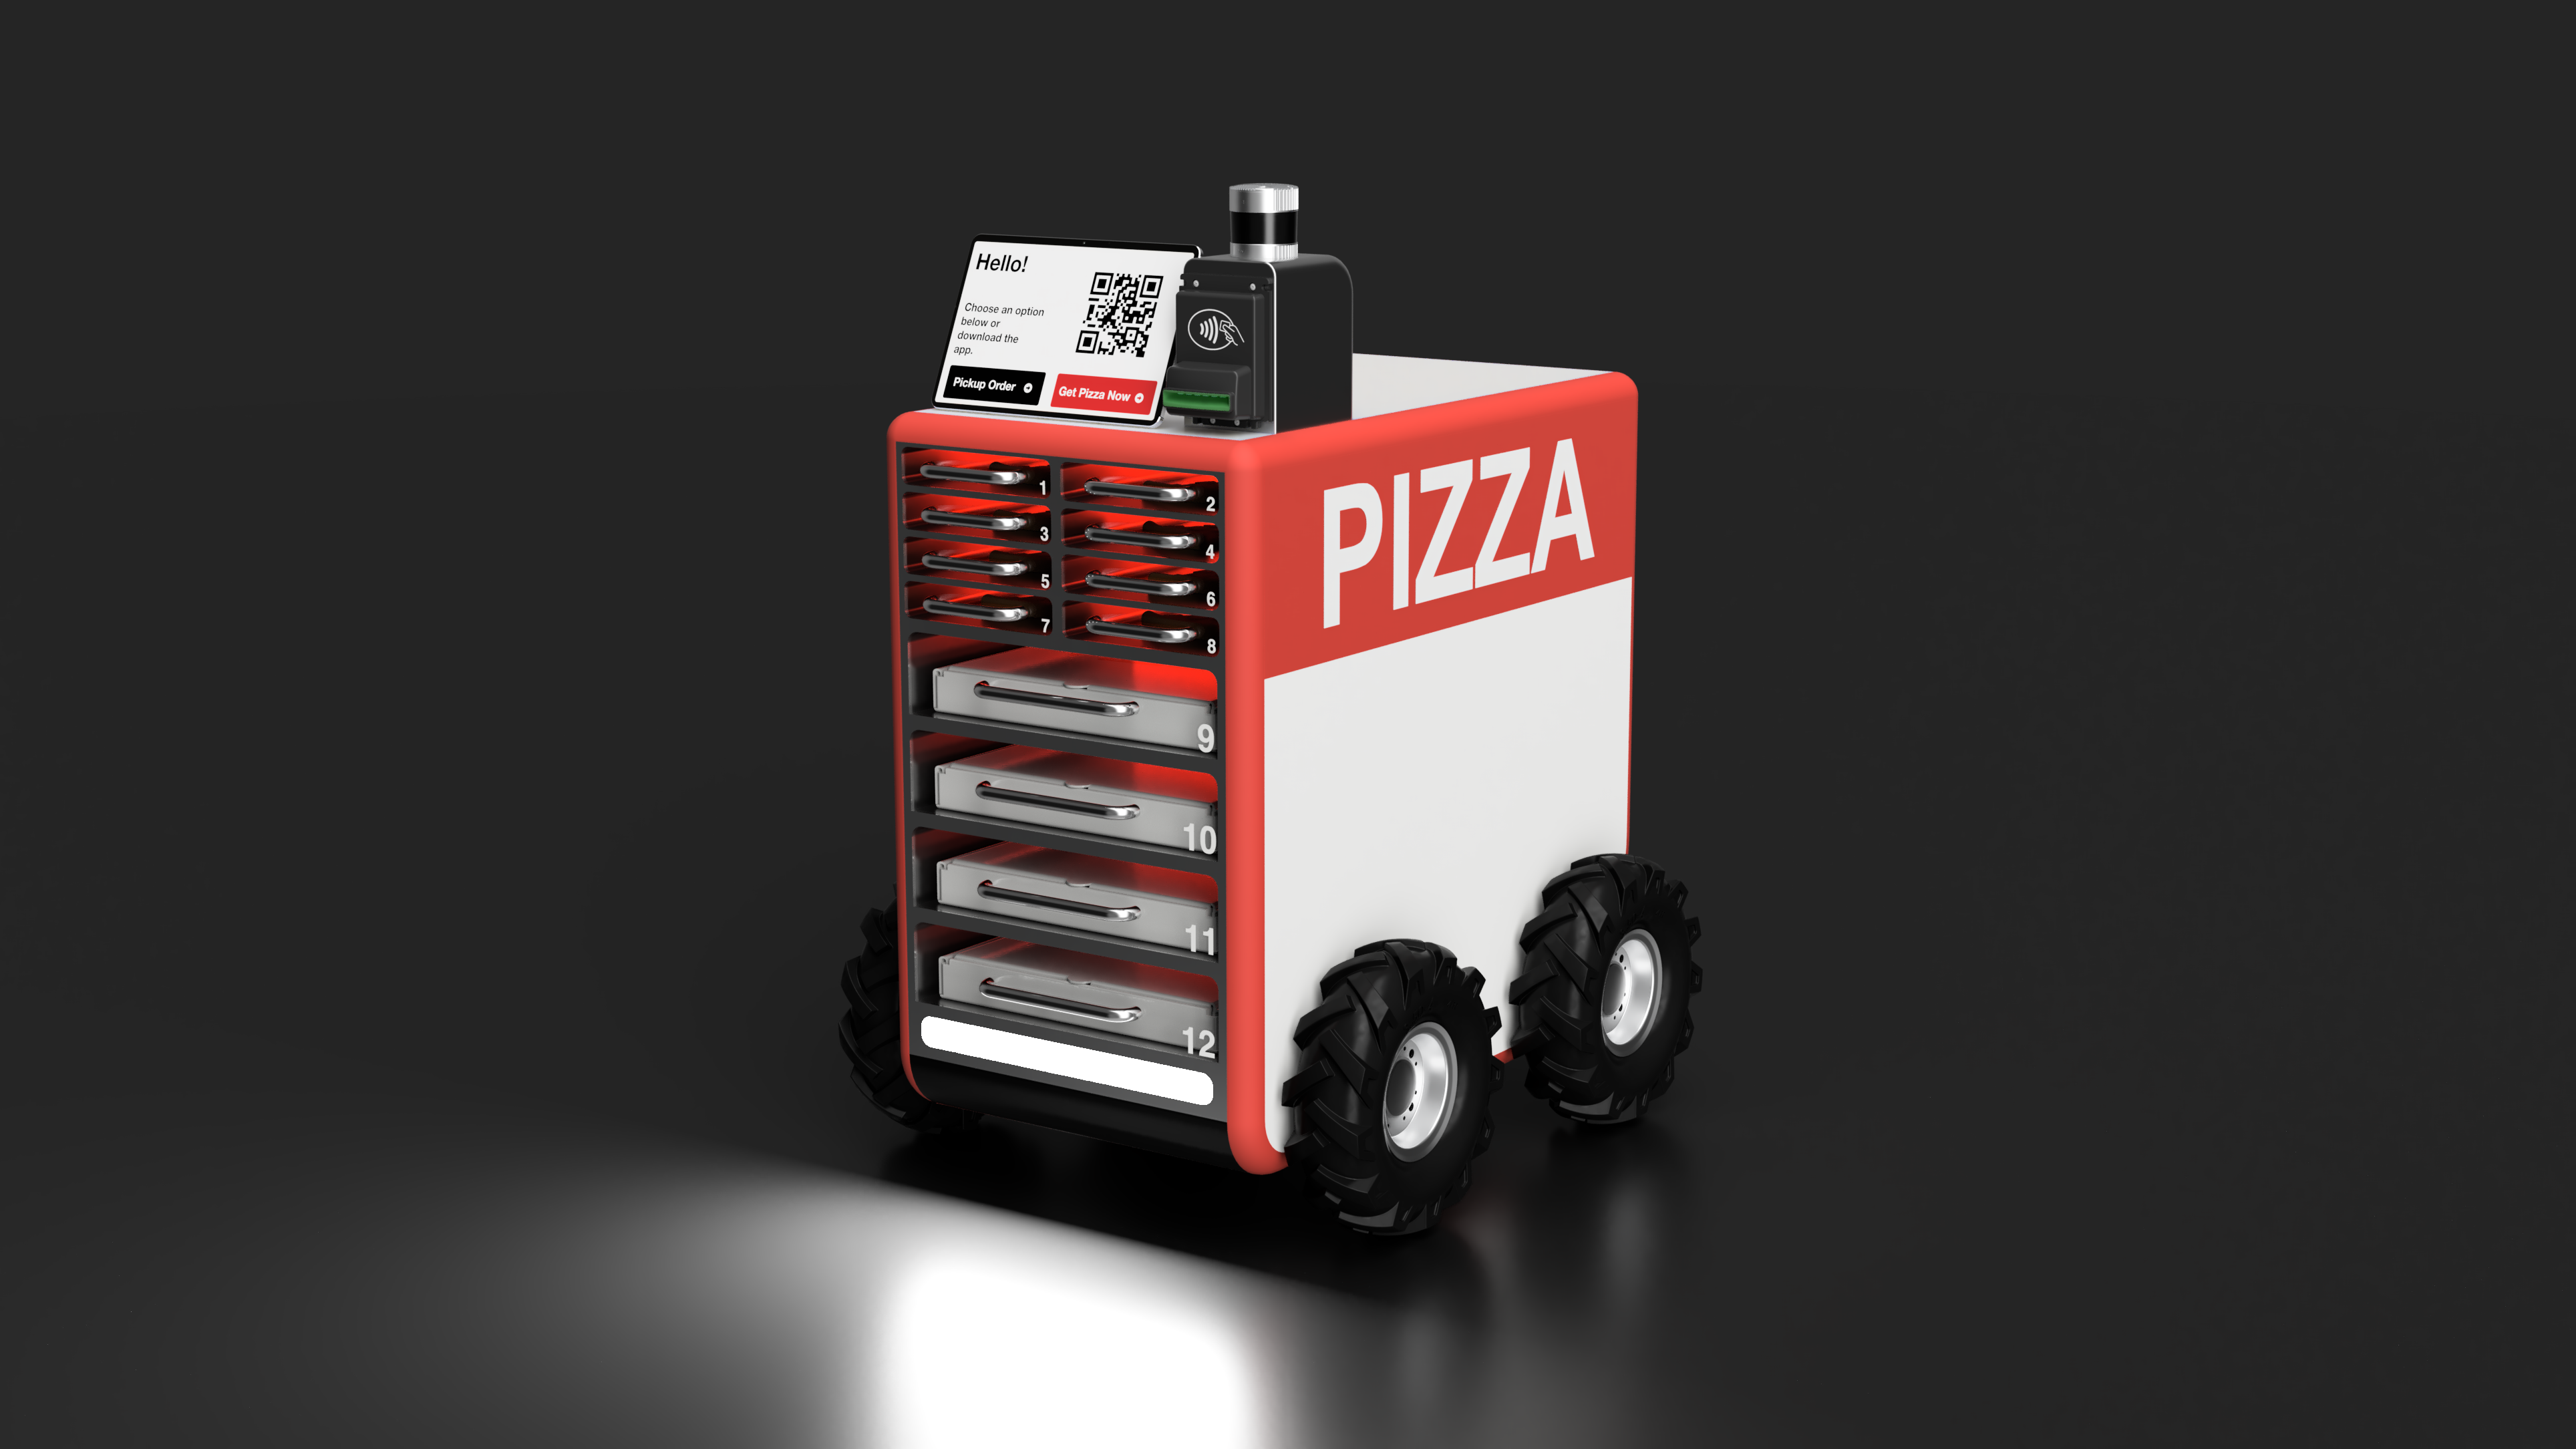 Pizzabot image